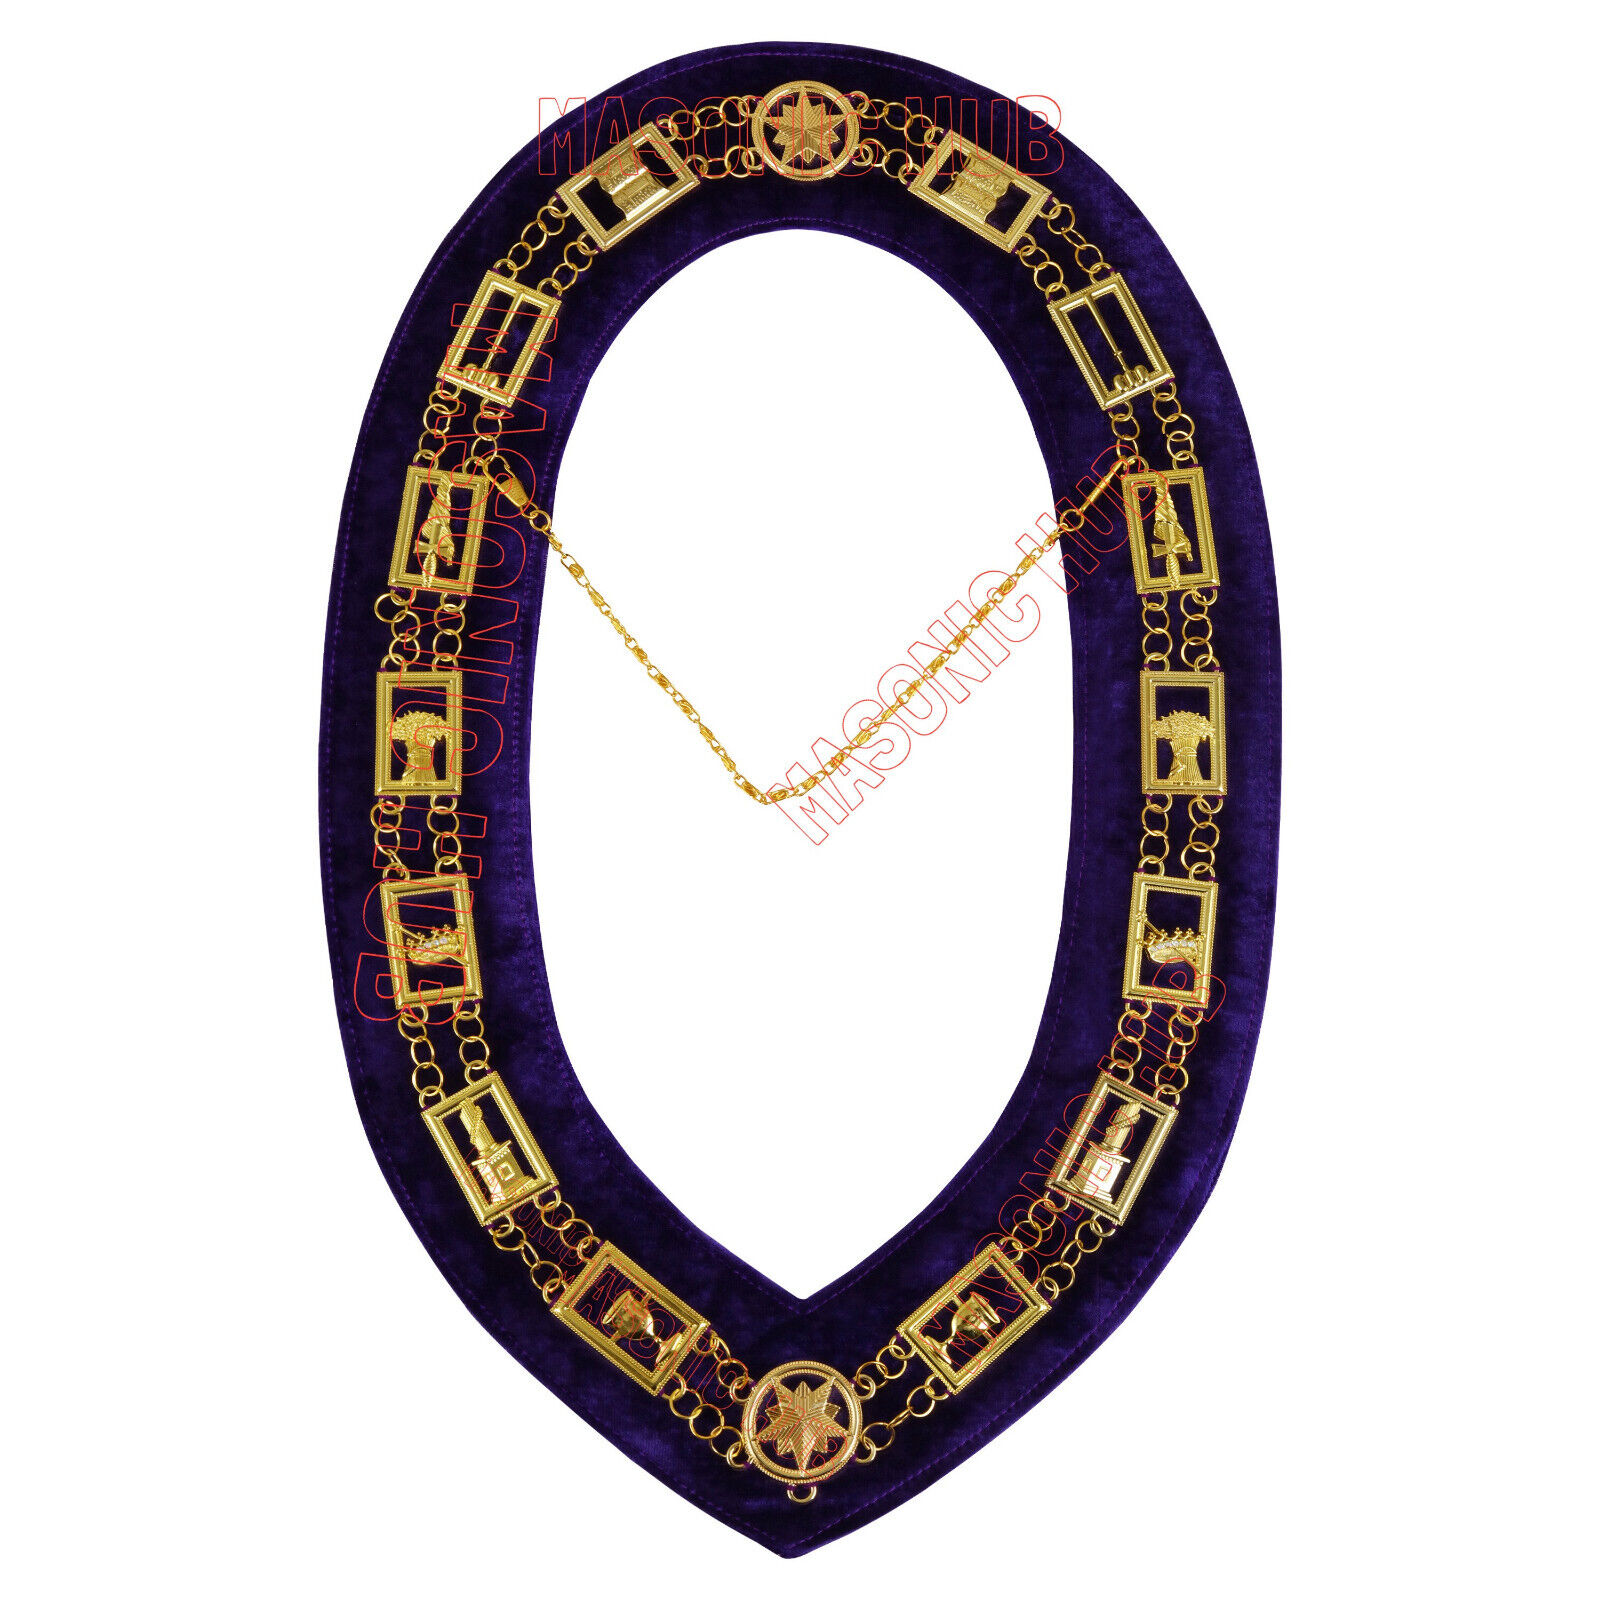 Masonic Regalia OES Order of Star Metal Chain Collar PURPLE Backing